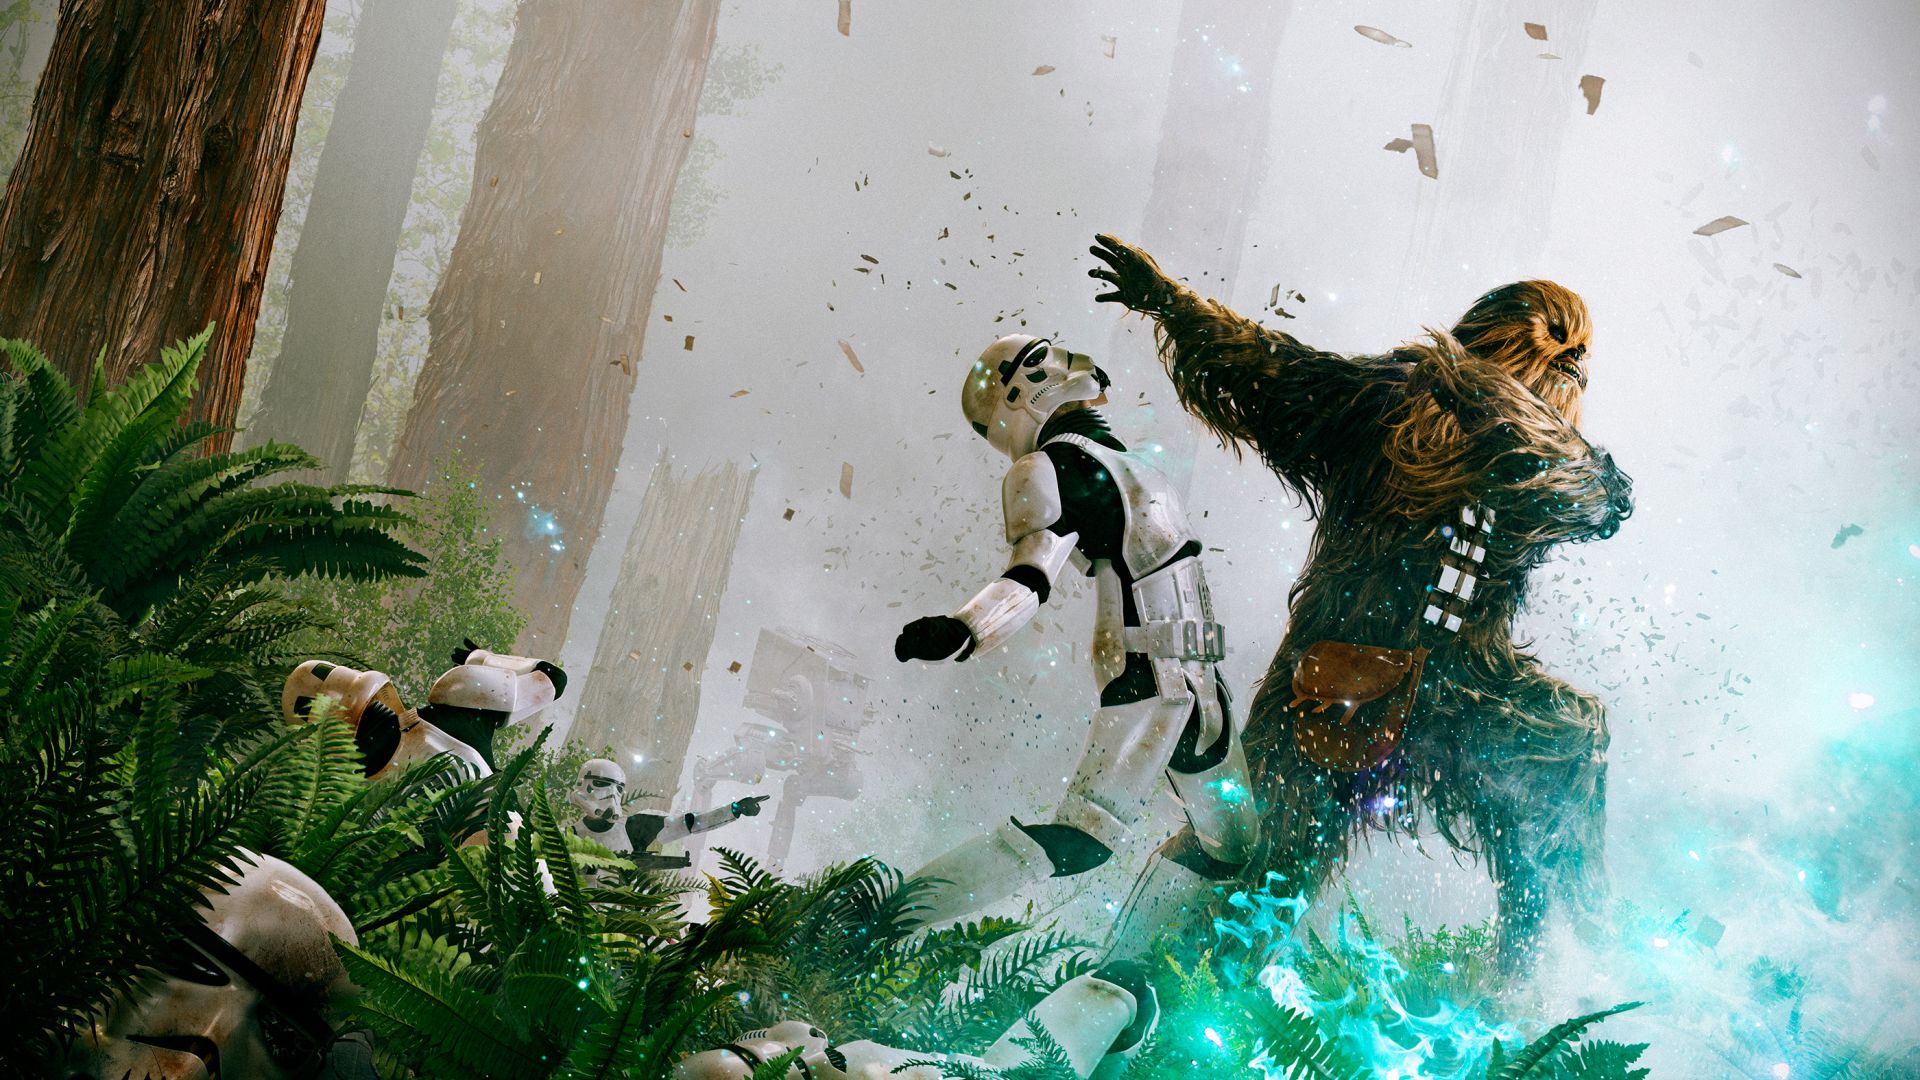 Wallpaper Chewbacca vs stormtrooper from star wars episode vi return of the jedi